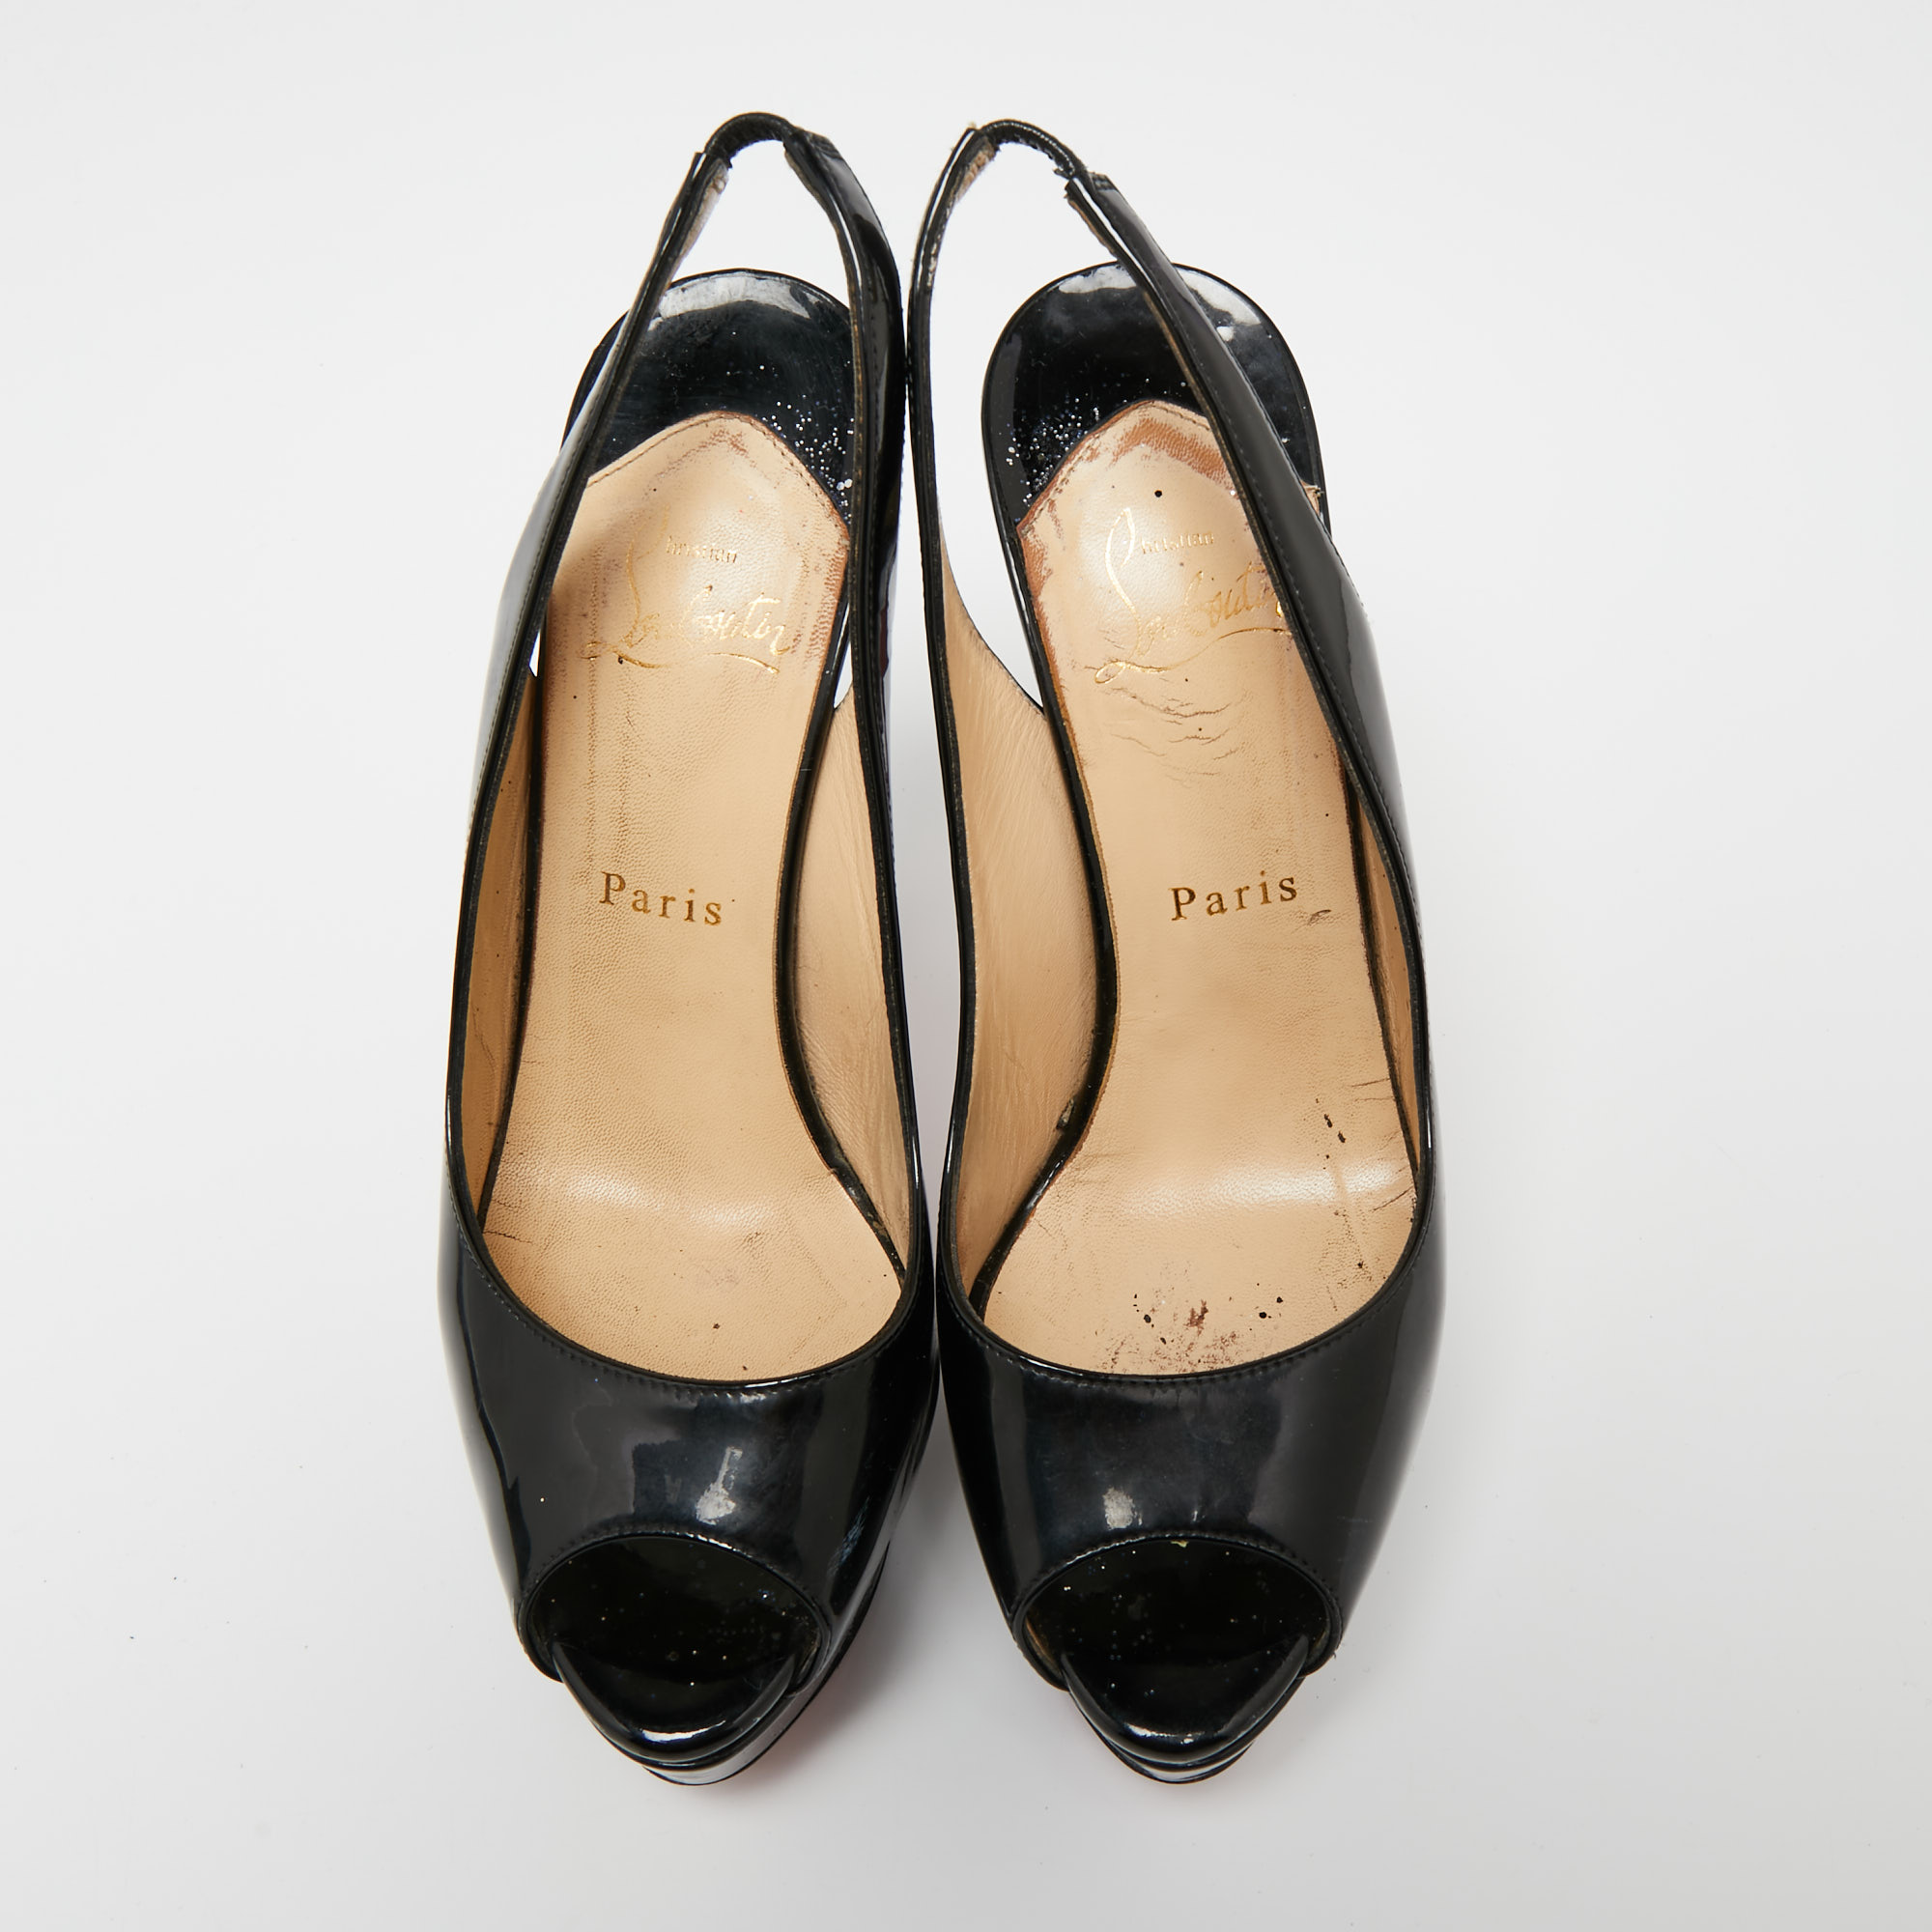 Christian Louboutin Black Patent Leather Lady Peep-Toe Slingback Platform Sandals Size 38.5